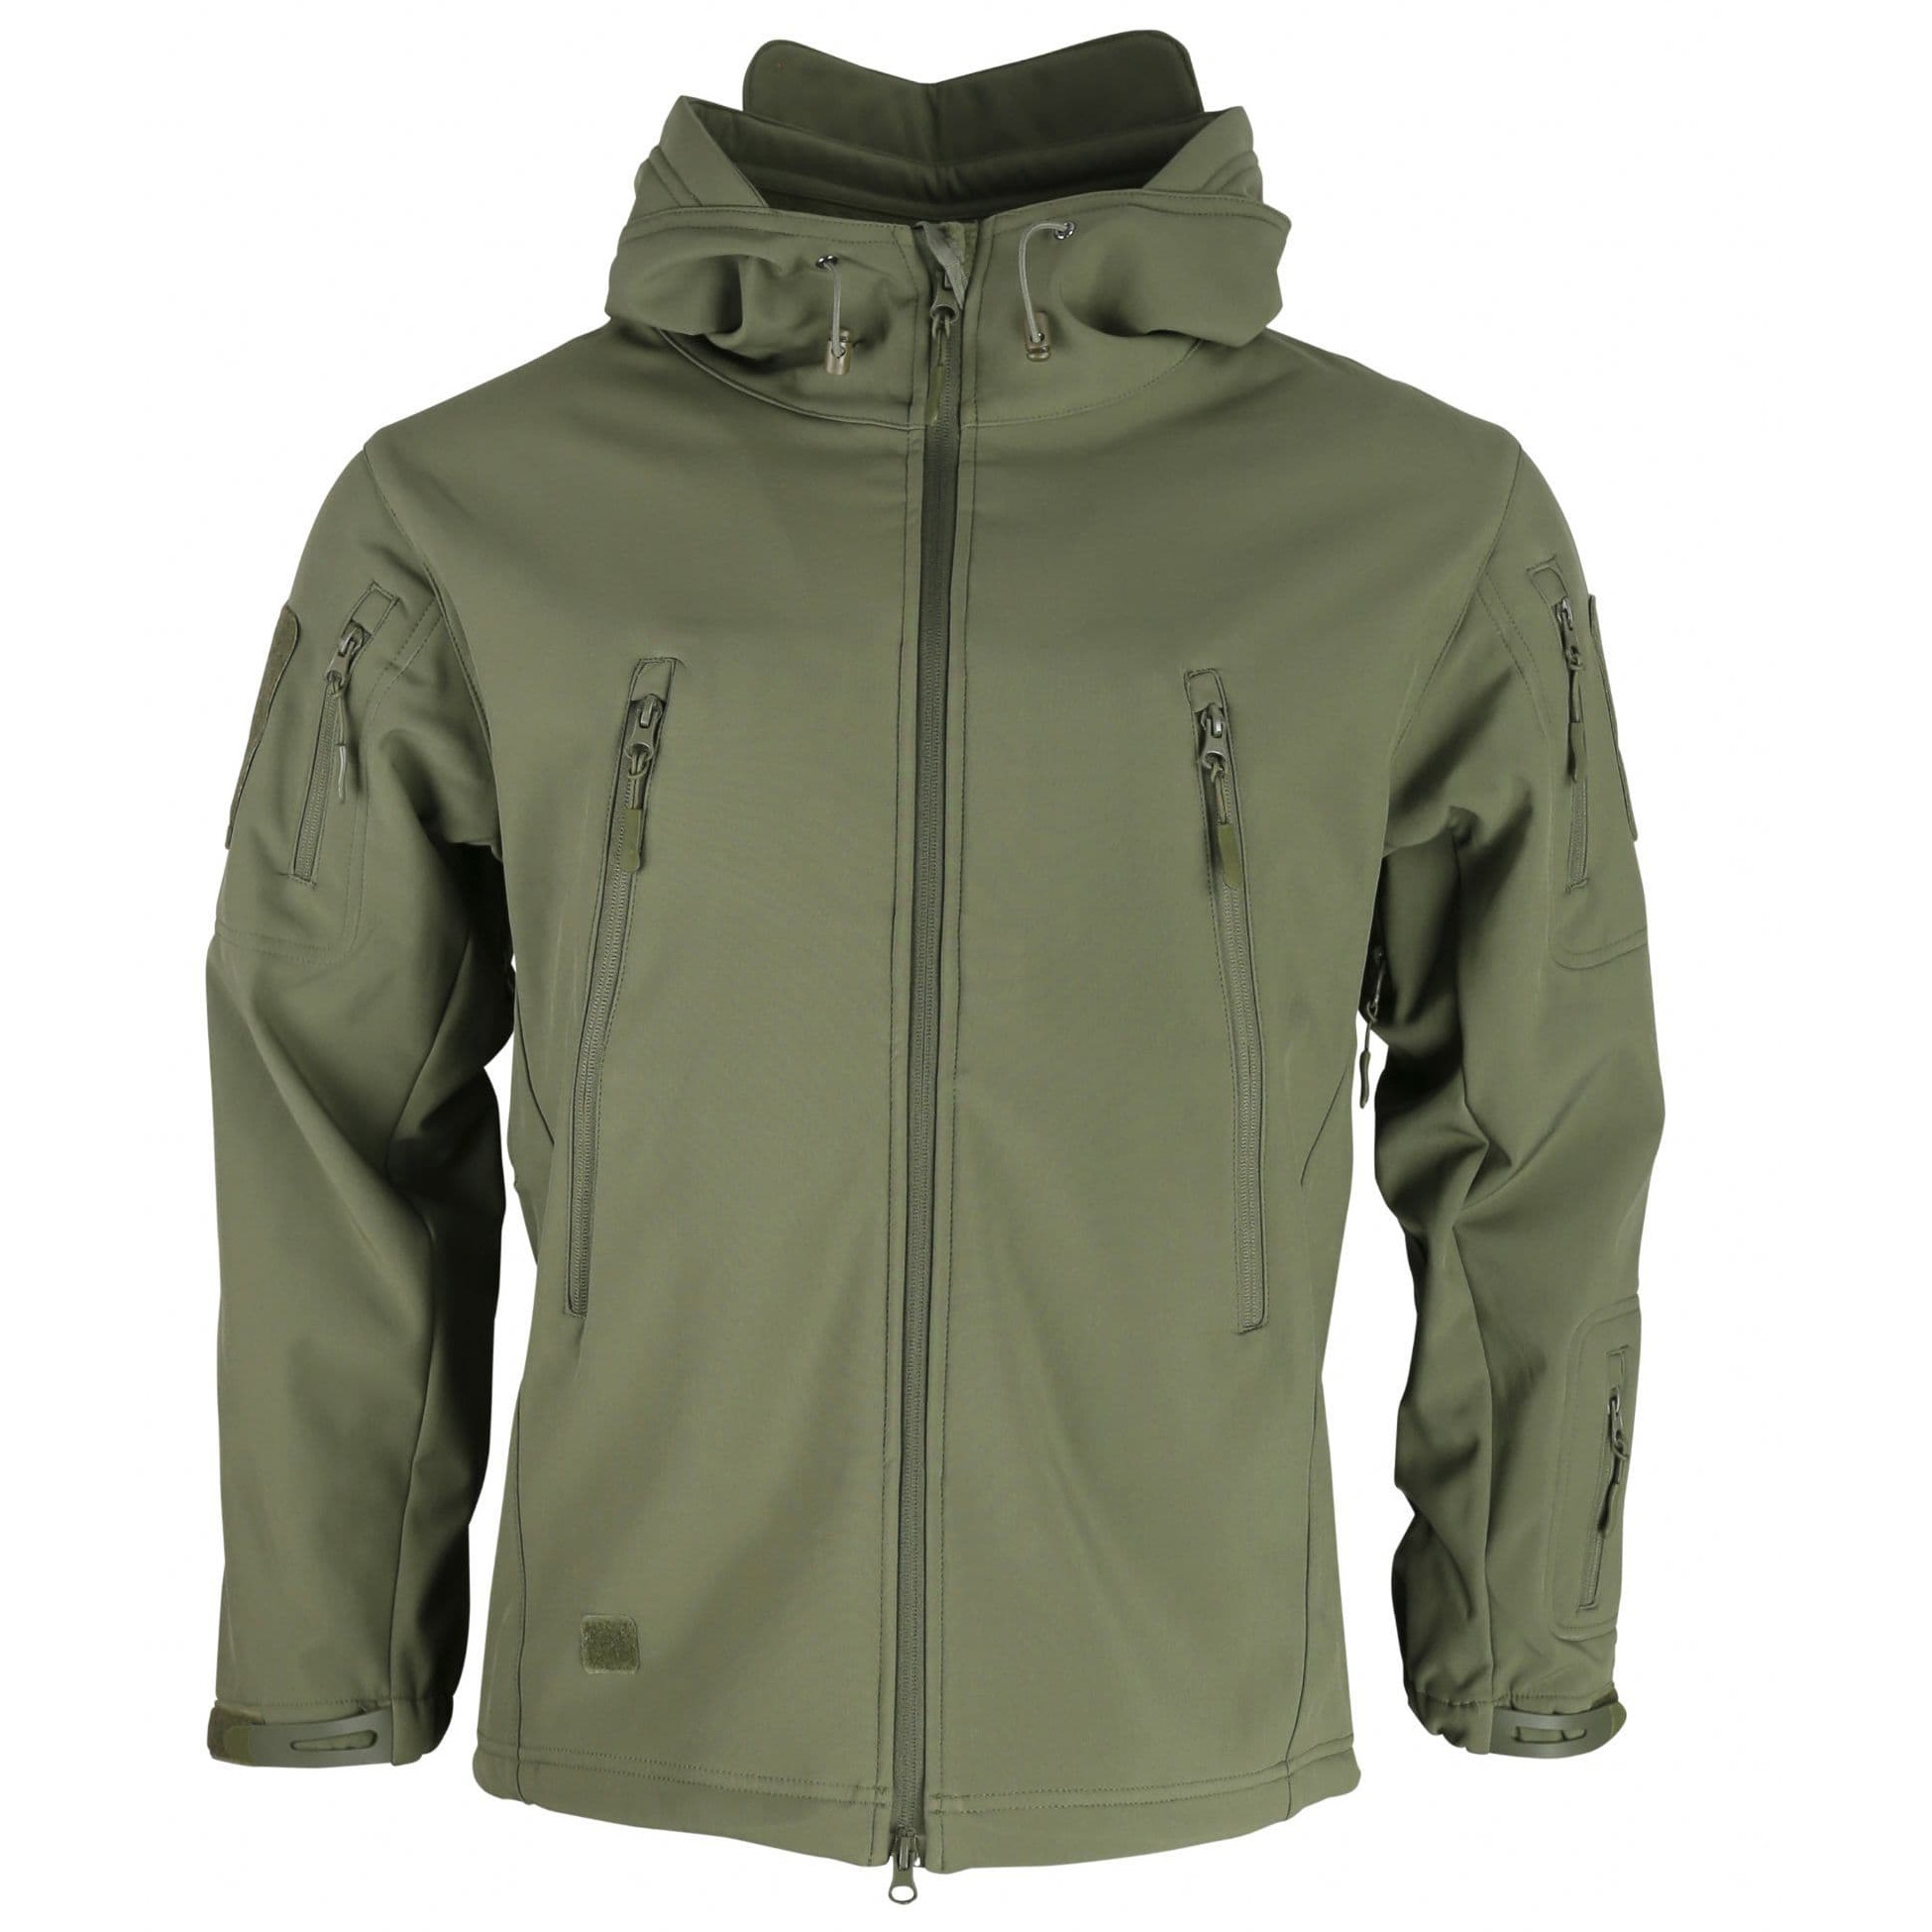 kombat-uk-patriot-tactical-jacket-multi-camo-olive-black-16719-colour-olive-size-s-(4)-9690-p.jpg